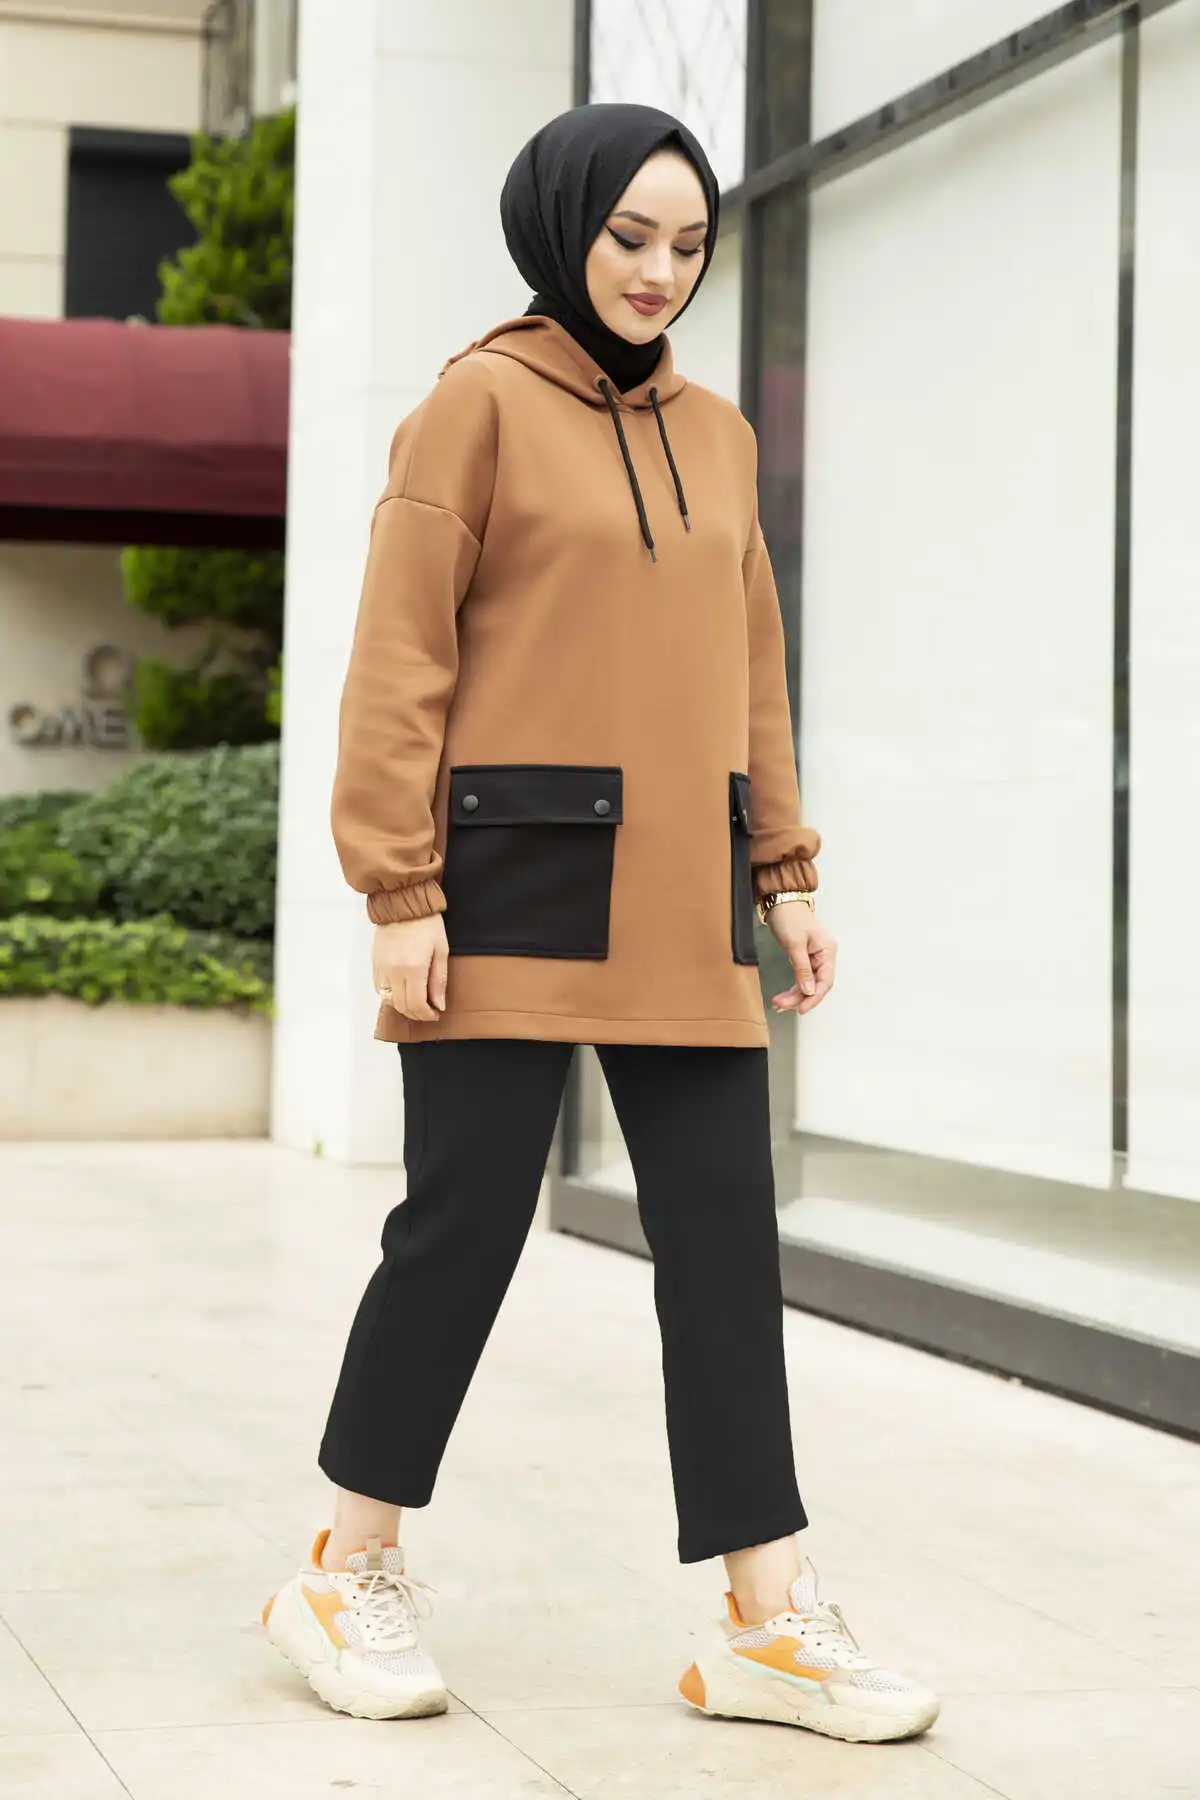 Pocket Detailed Hijab Suit Tunic with Pants Turkey Muslim Fashion Dress Islam Clothing Dubai Istanbul 2022